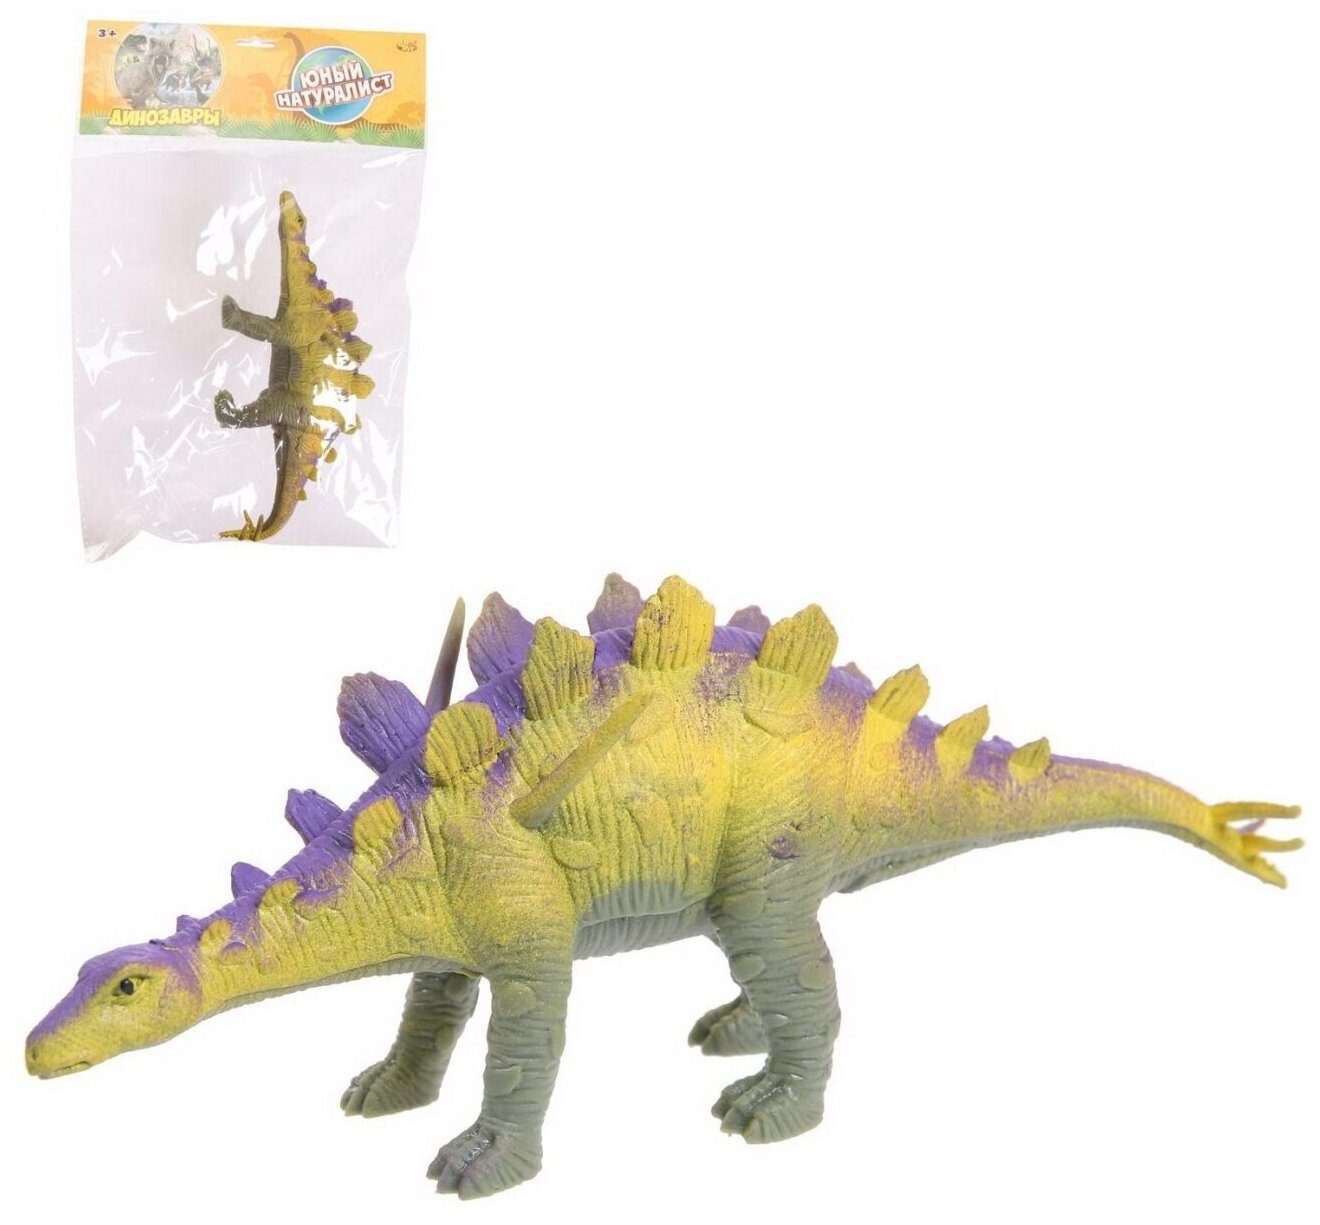 Фигурка Abtoys Юный натуралист Динозавр Стегозавр, резина термопласт. PT-01700